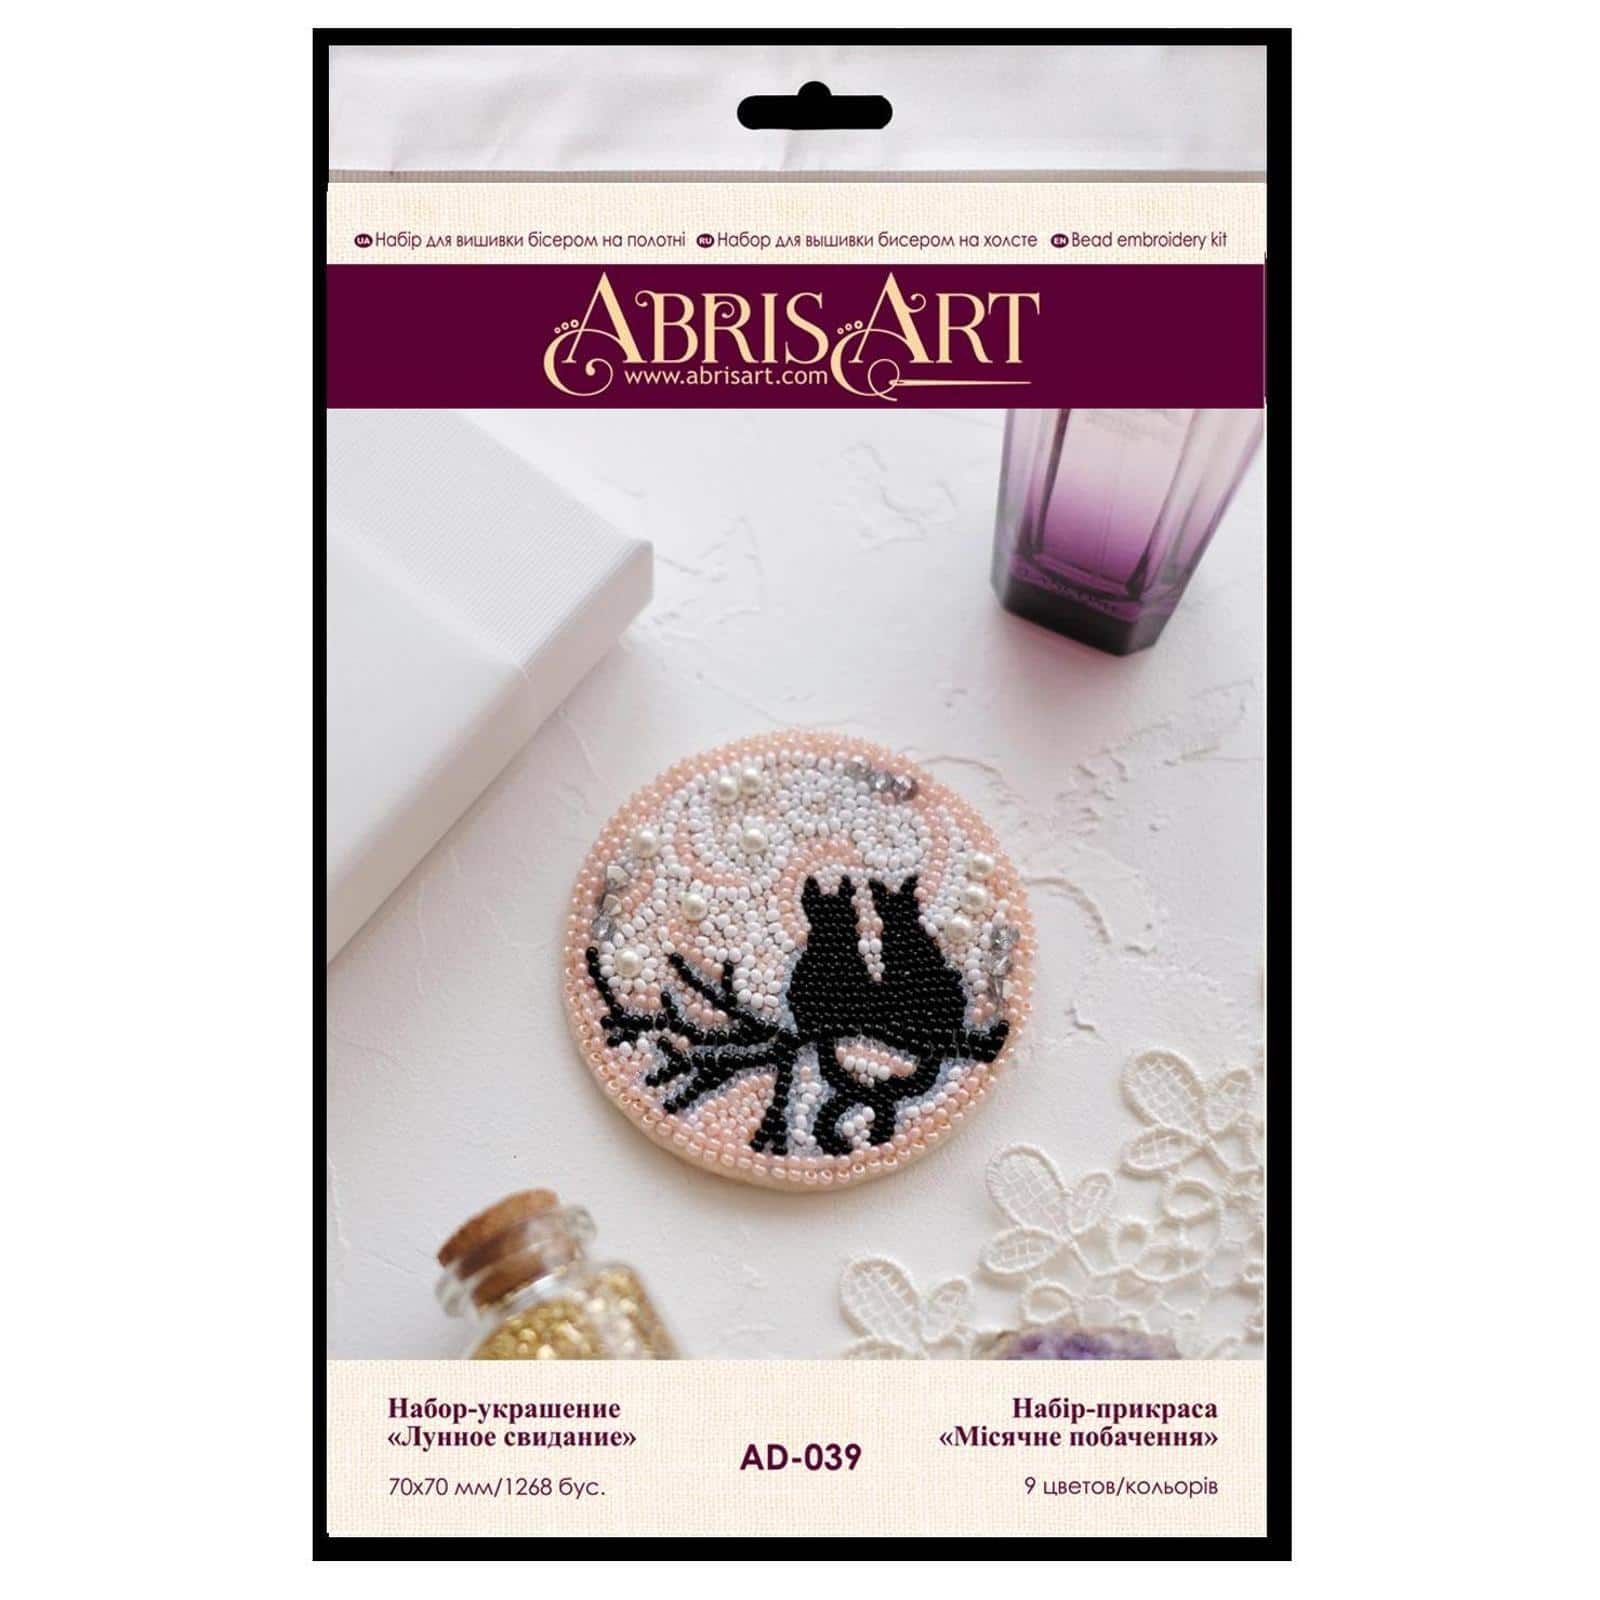 Abris Art Moon Date Decoration Kit